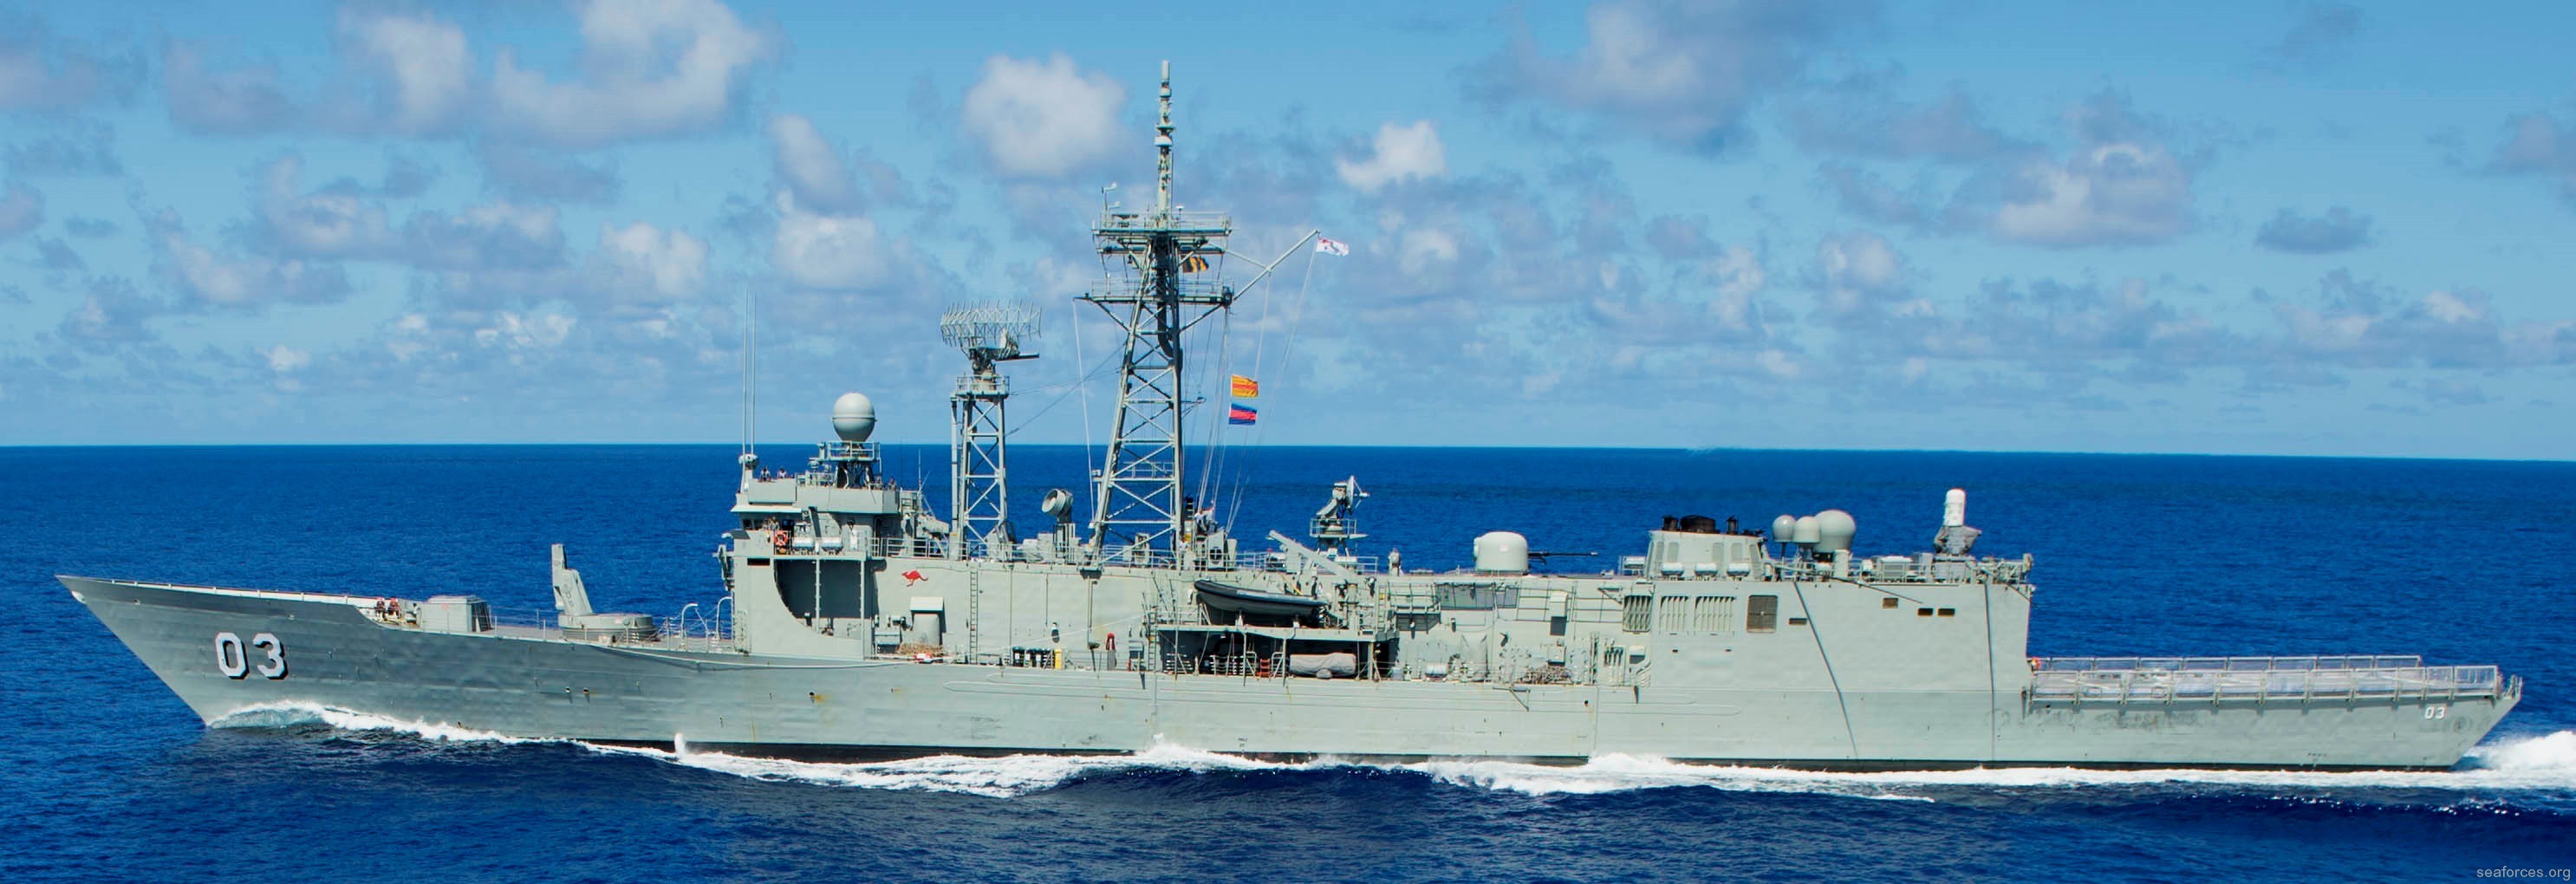 ffg-03 hmas sydney adelaide class frigate royal australian navy 2013 06